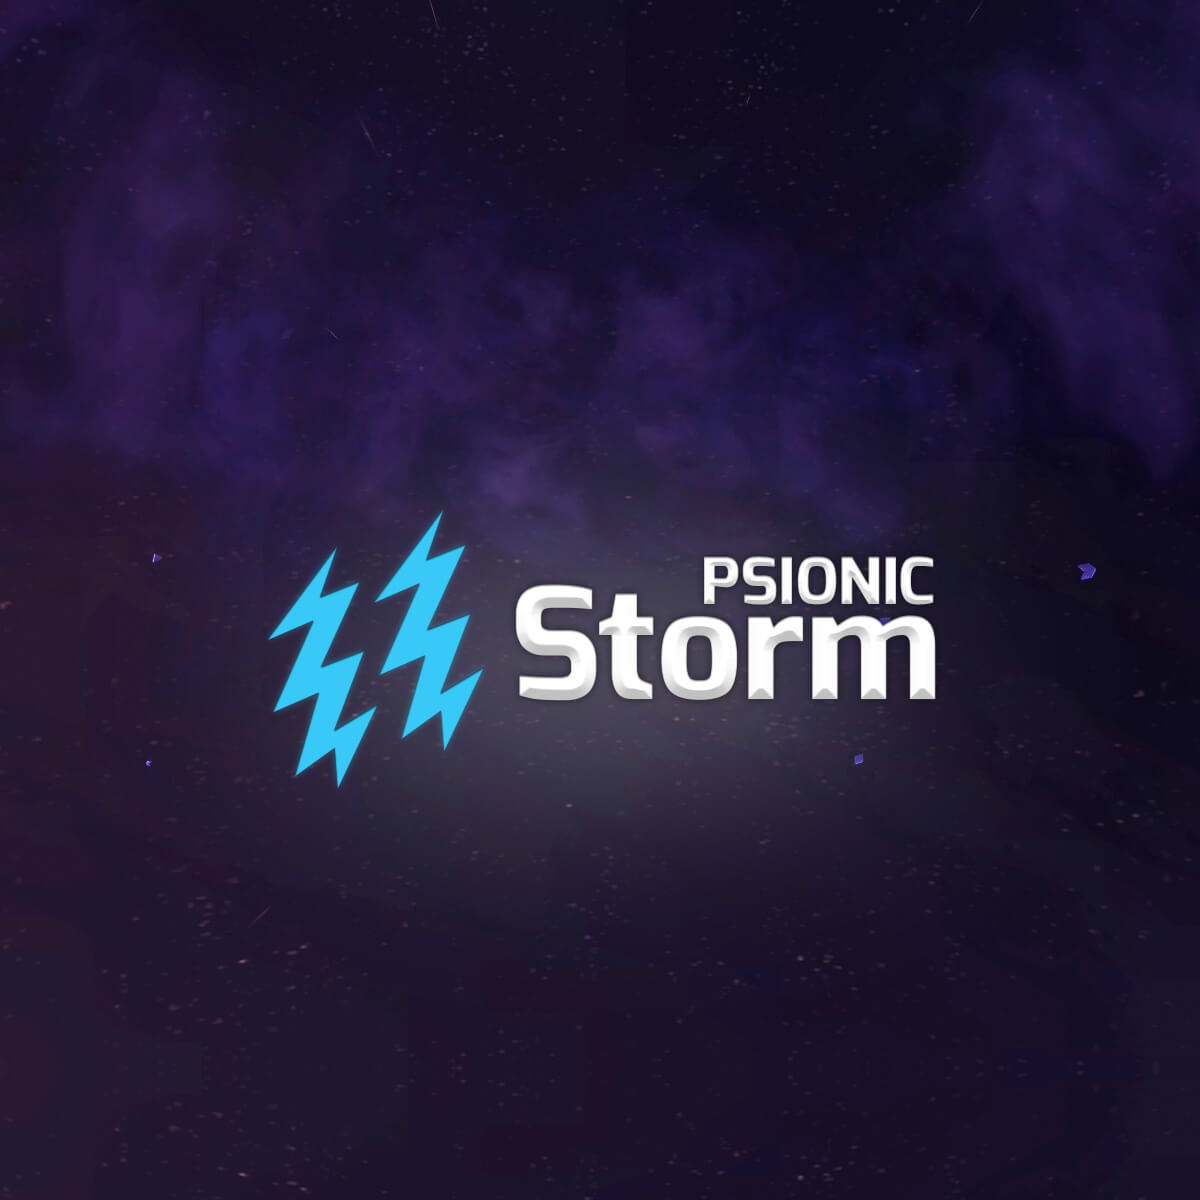 Nouveautés vues à la Gamescom'17 - Psionic Storm - Heroes of the Storm  overwhelming!